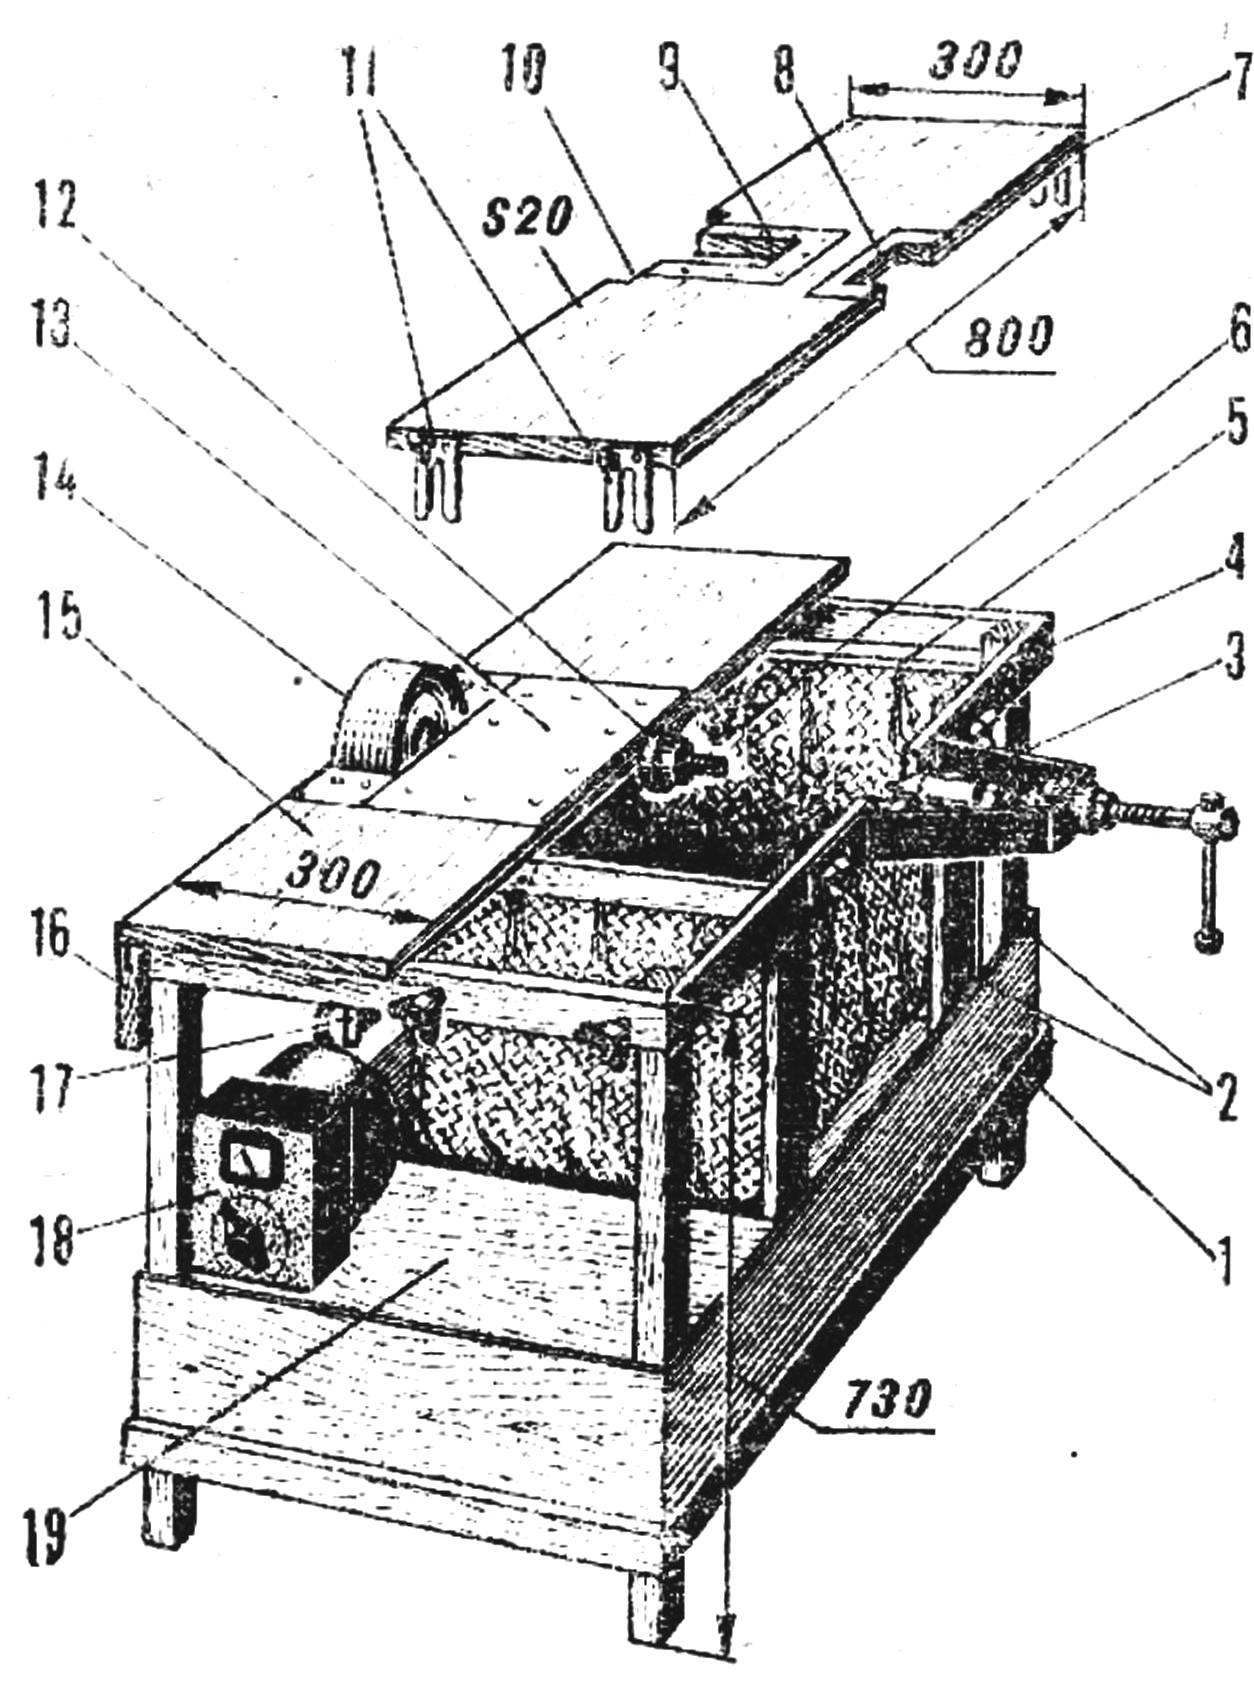 Fig. 1. Homemade machine